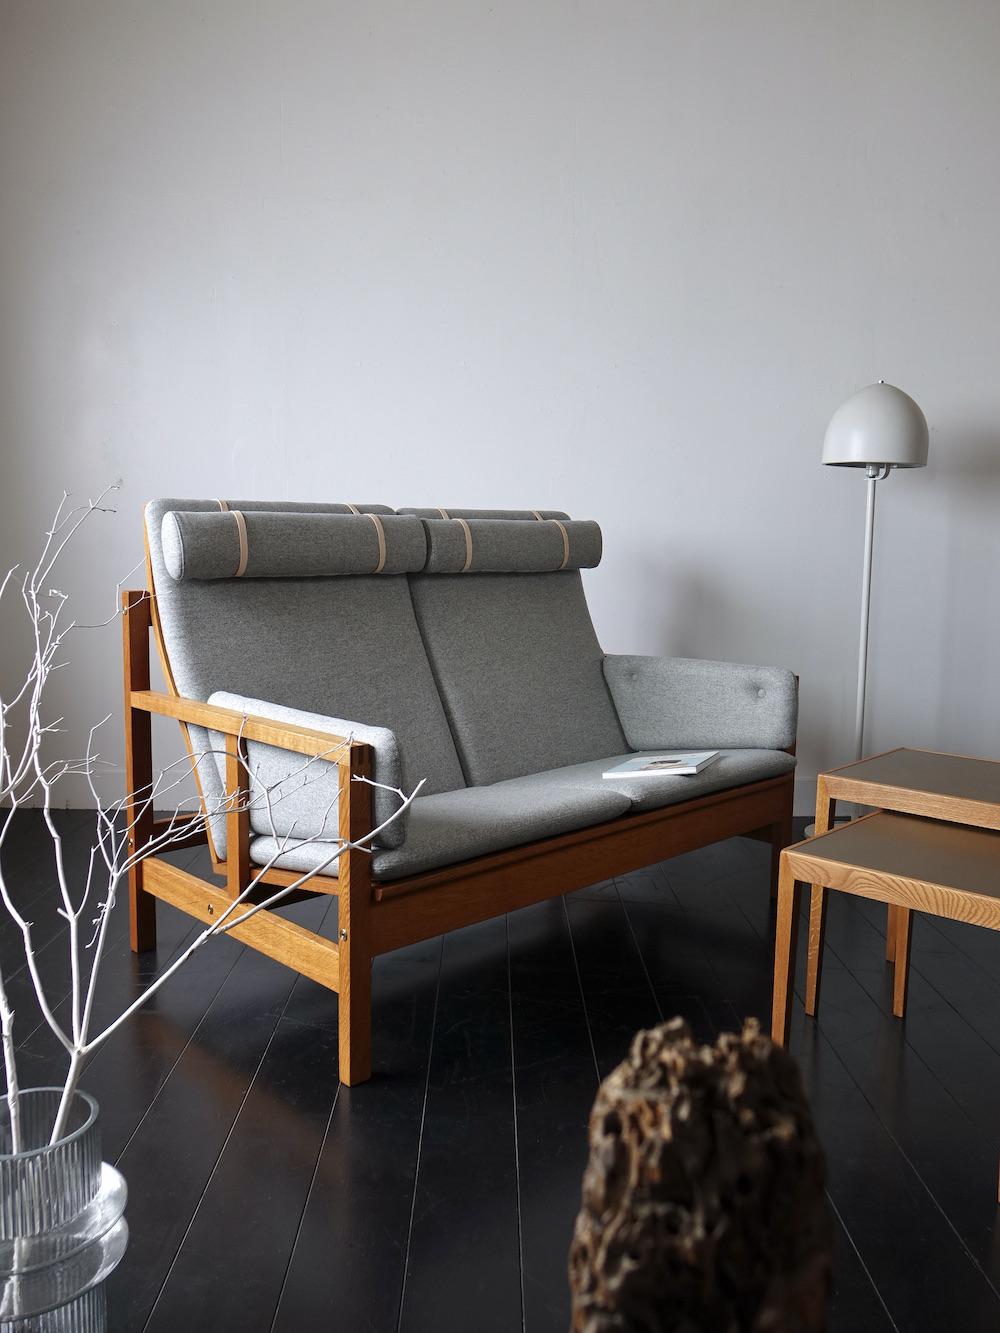 Sofa “model 2252” by Borge Mogensen for Fredericia